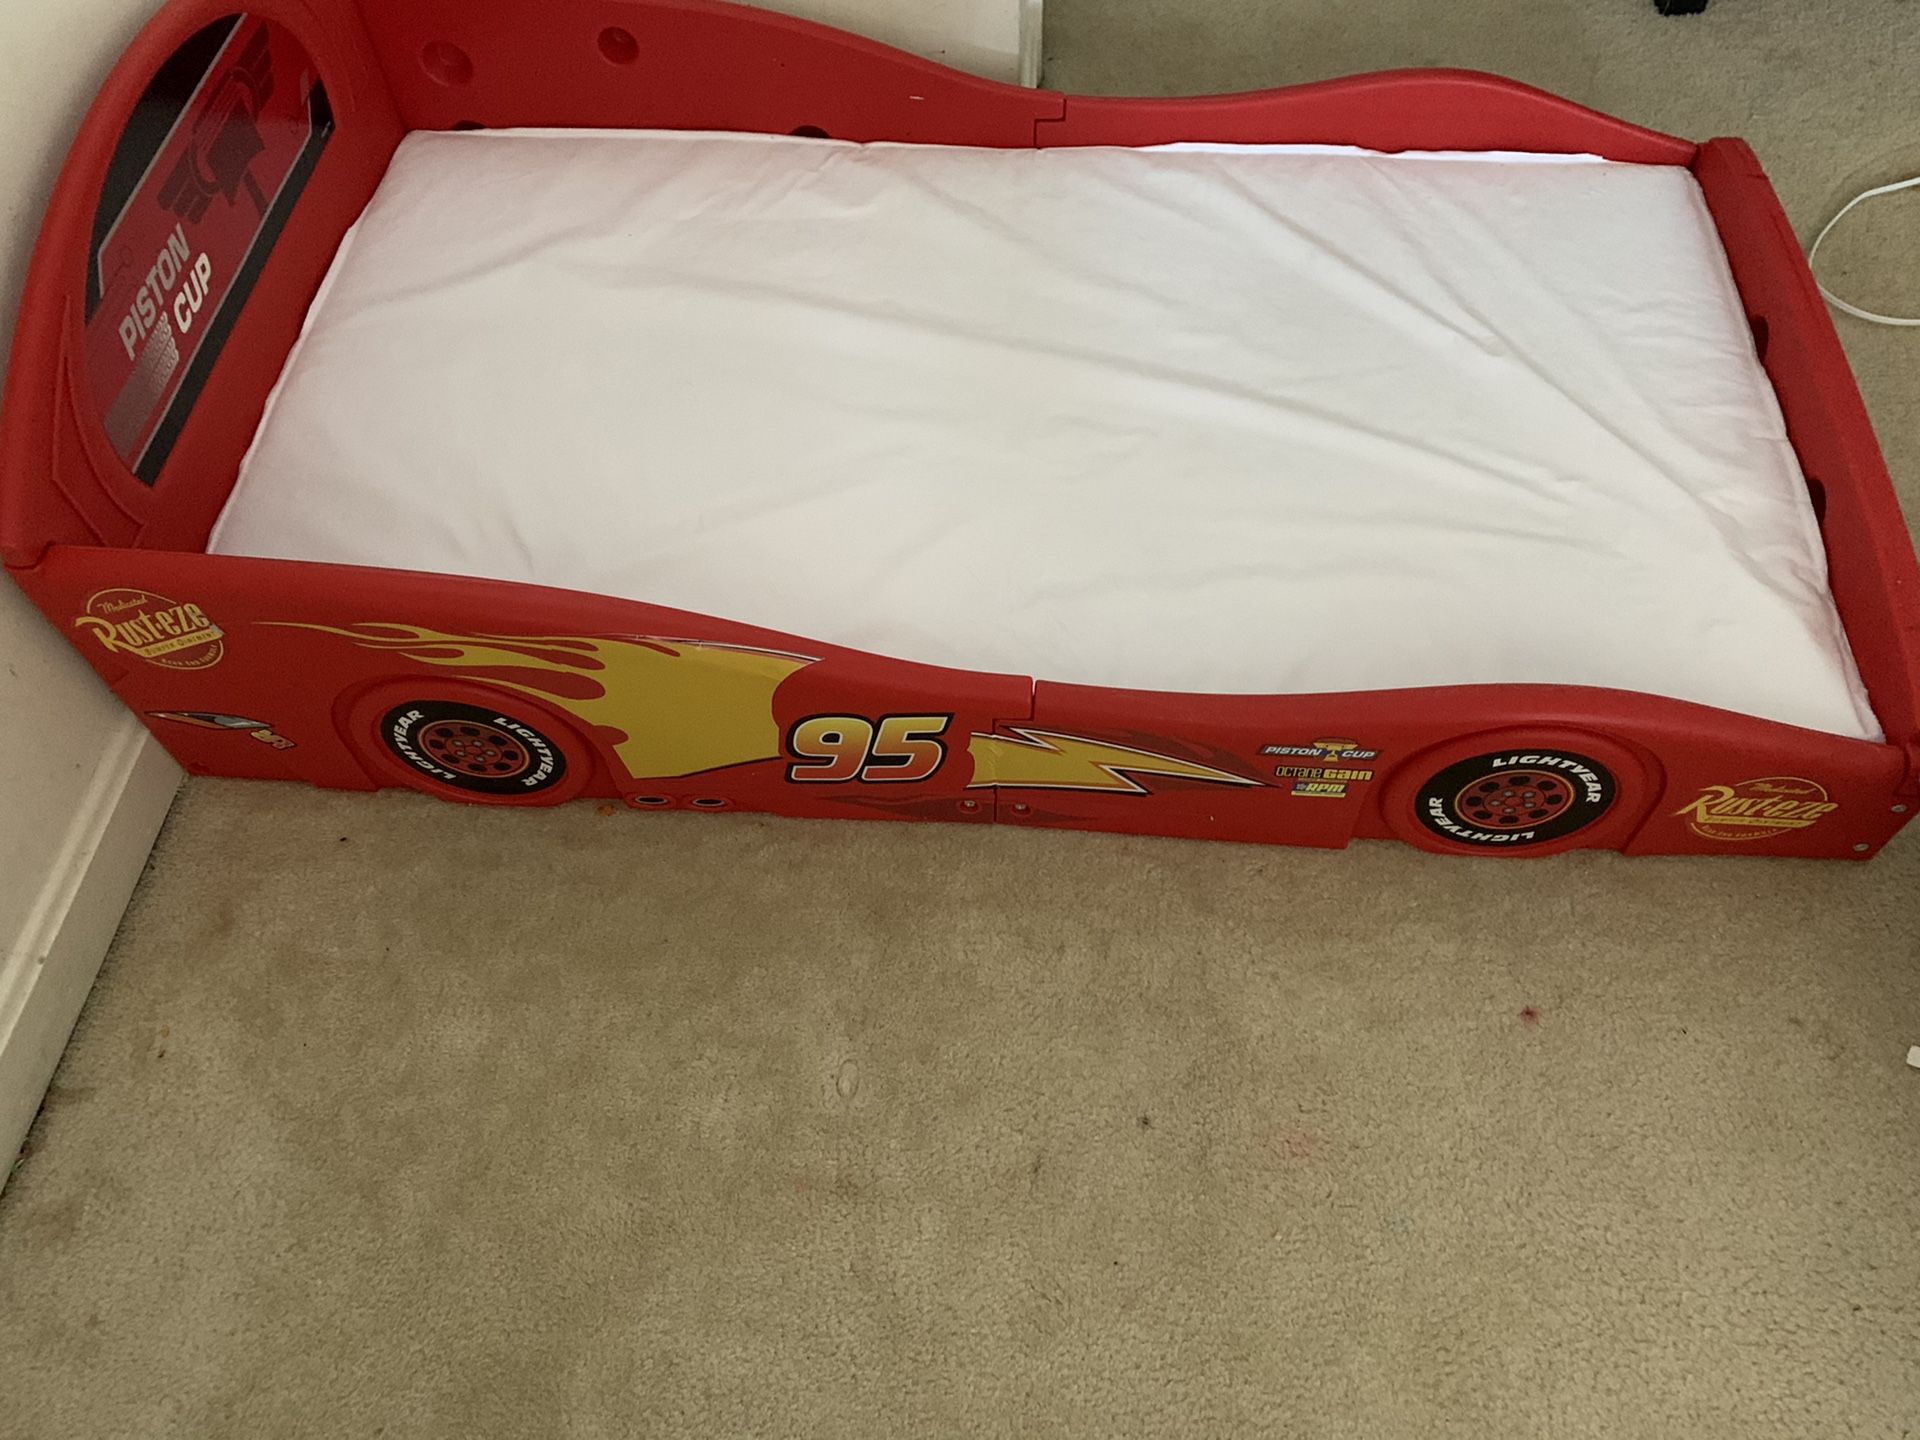 Toddler car bed